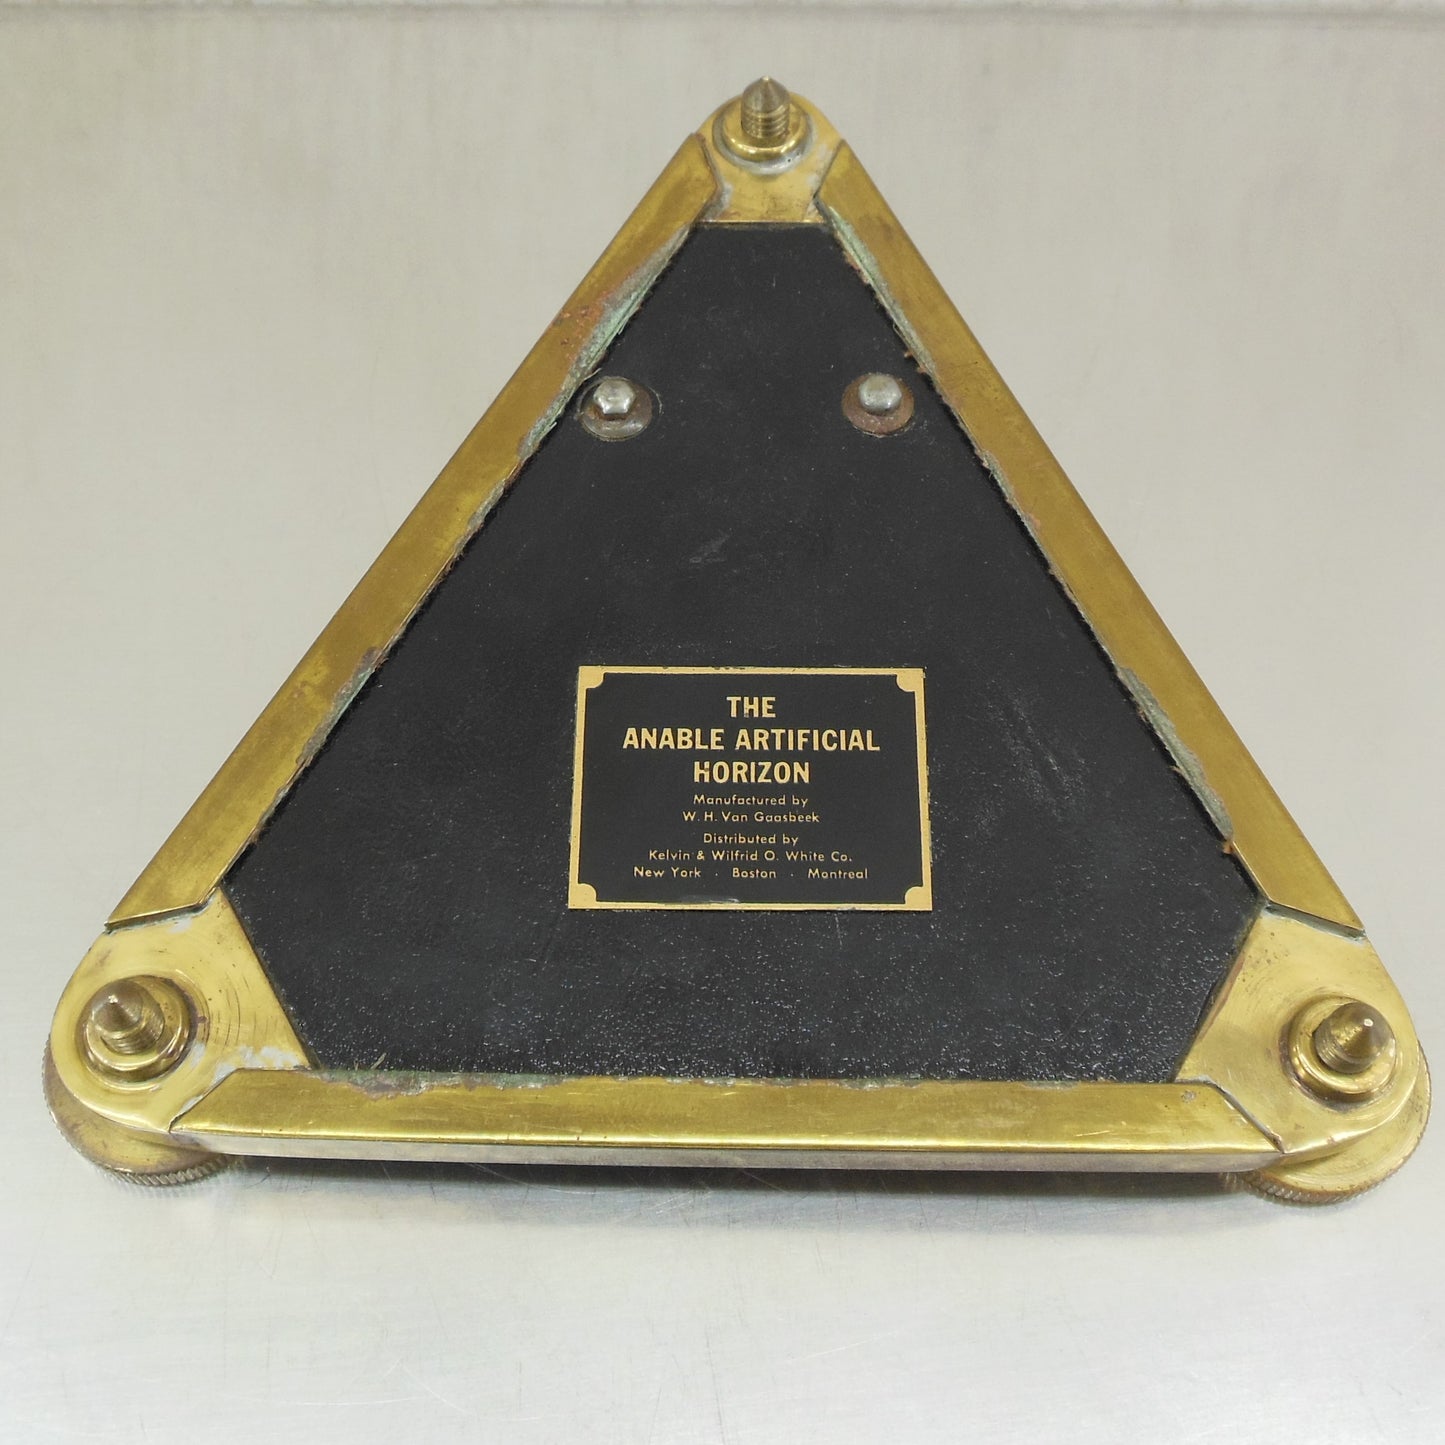 Kelvin & Wilfrid O. White Co. Gaasbeek The Anable Artificial Horizon Nautical Navigation triangular